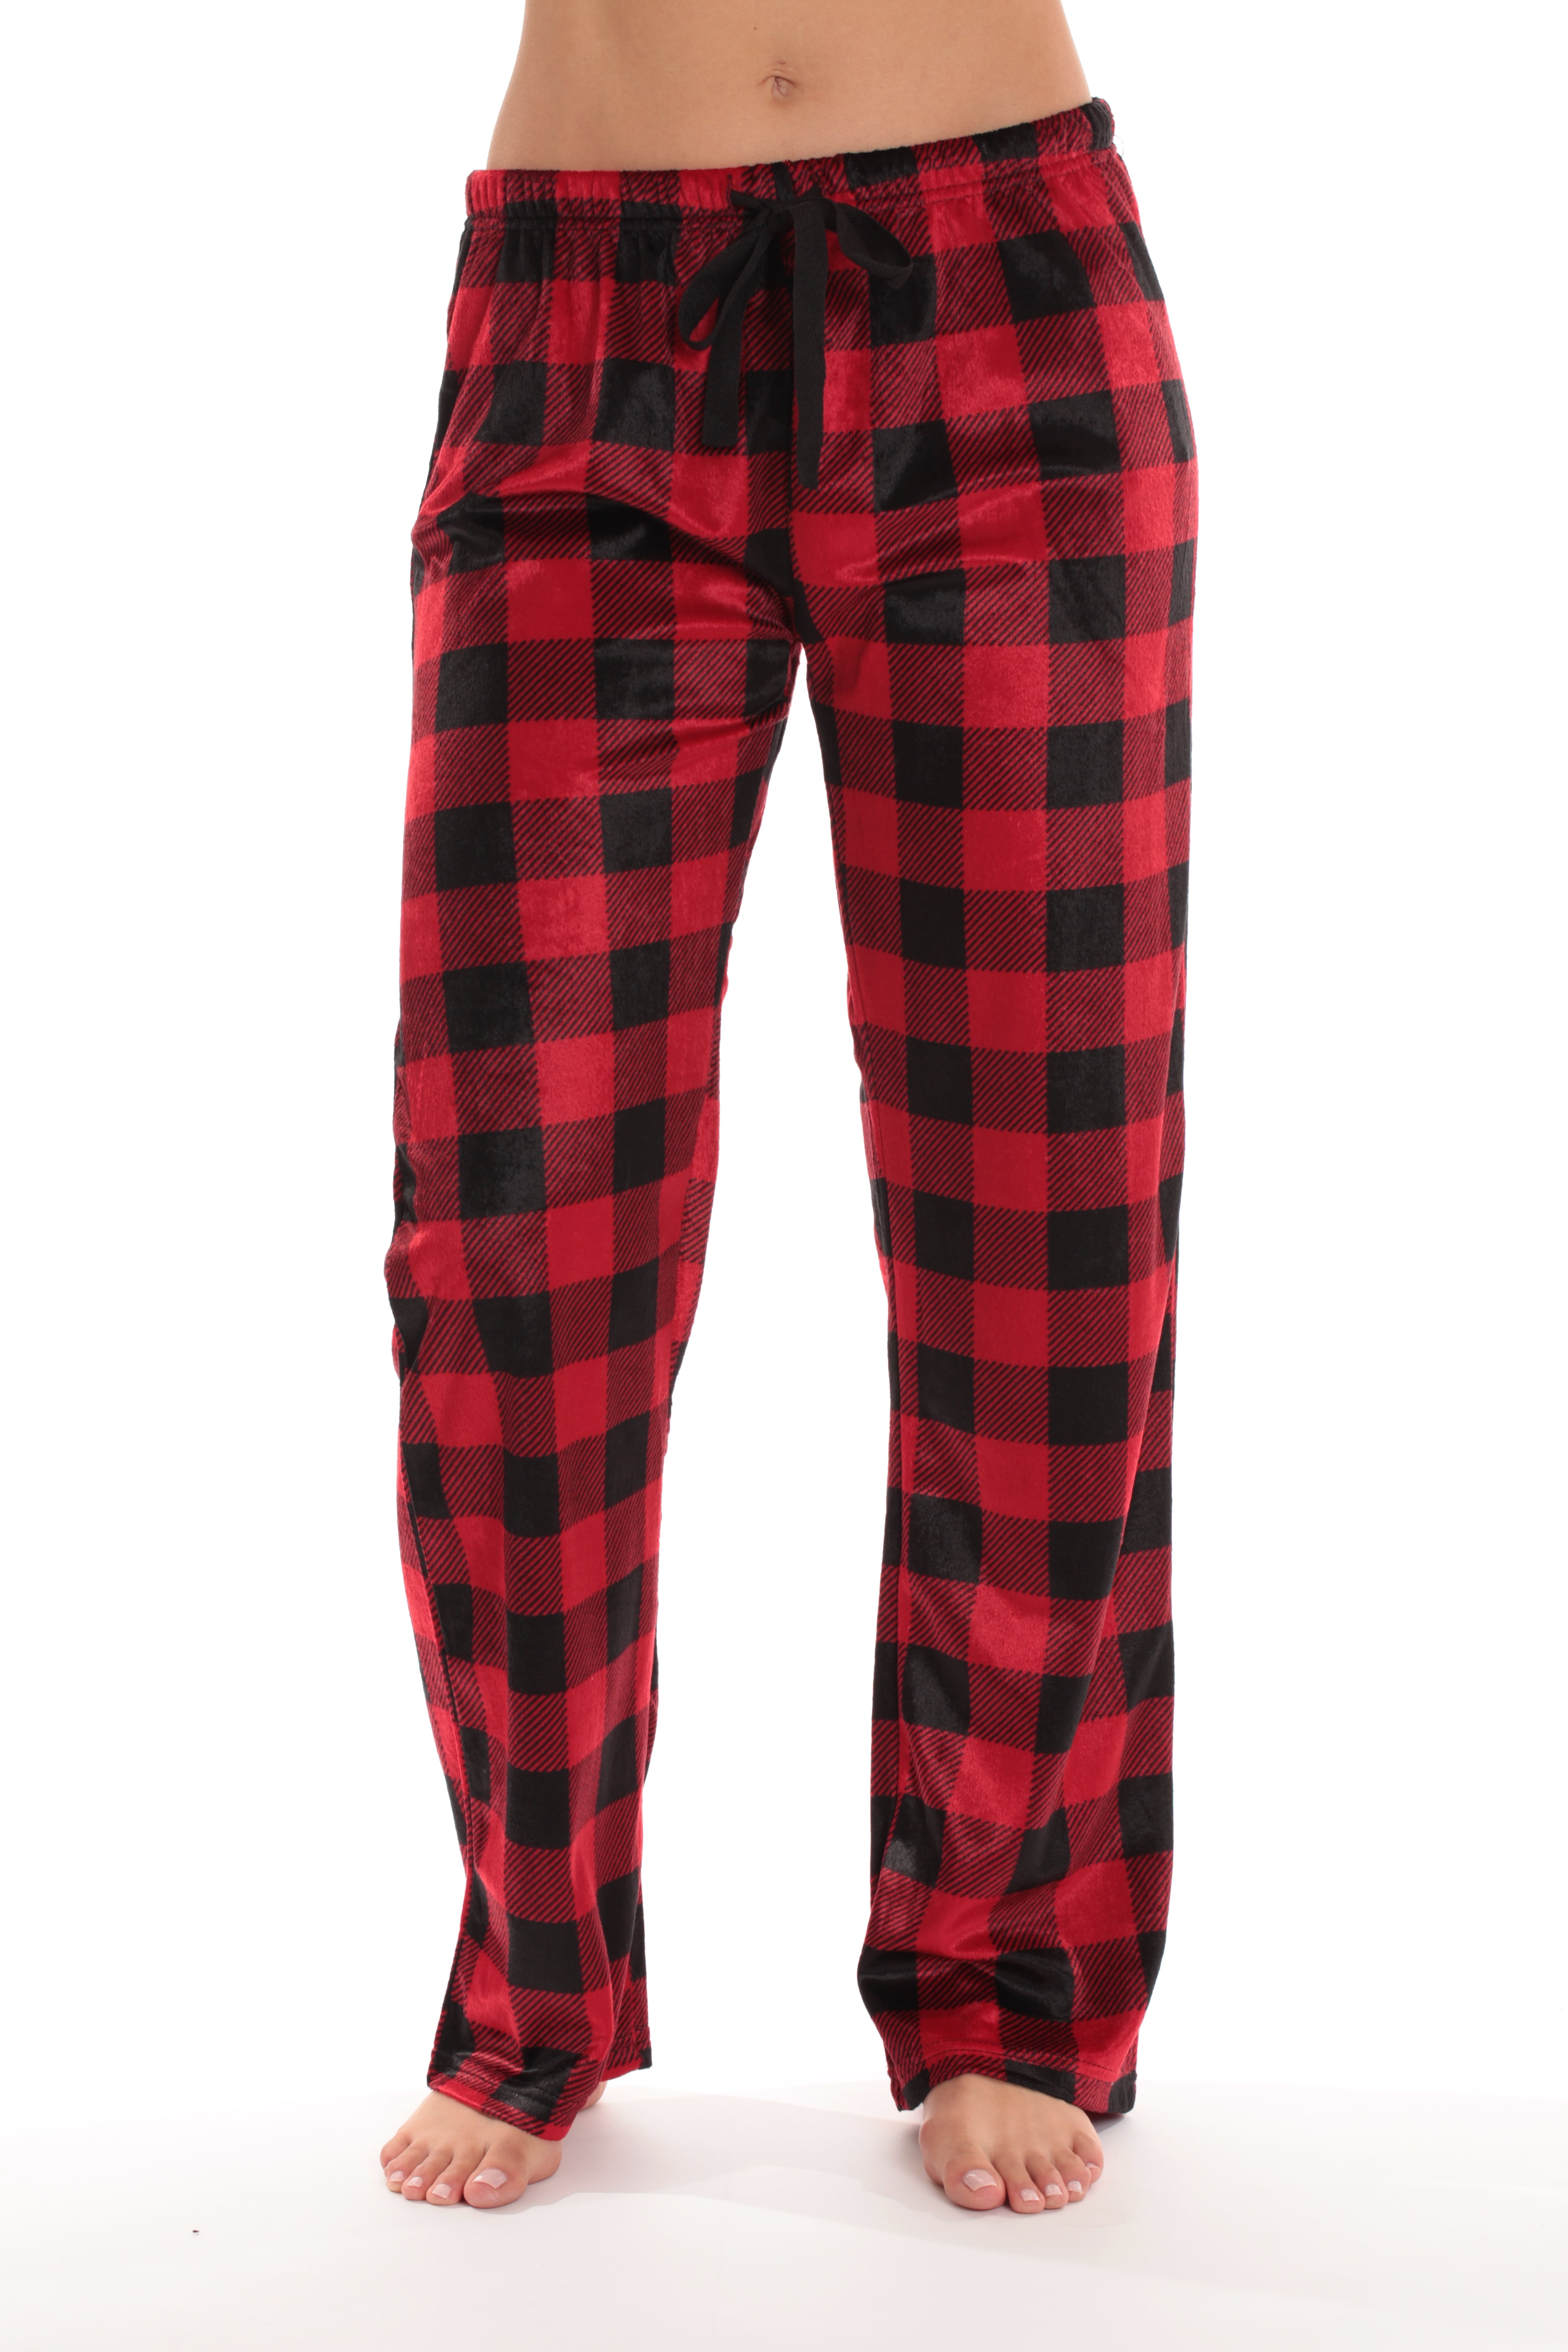 #followme Silky Fleece Buffalo Plaid Pajama Pants for Women (Red ...